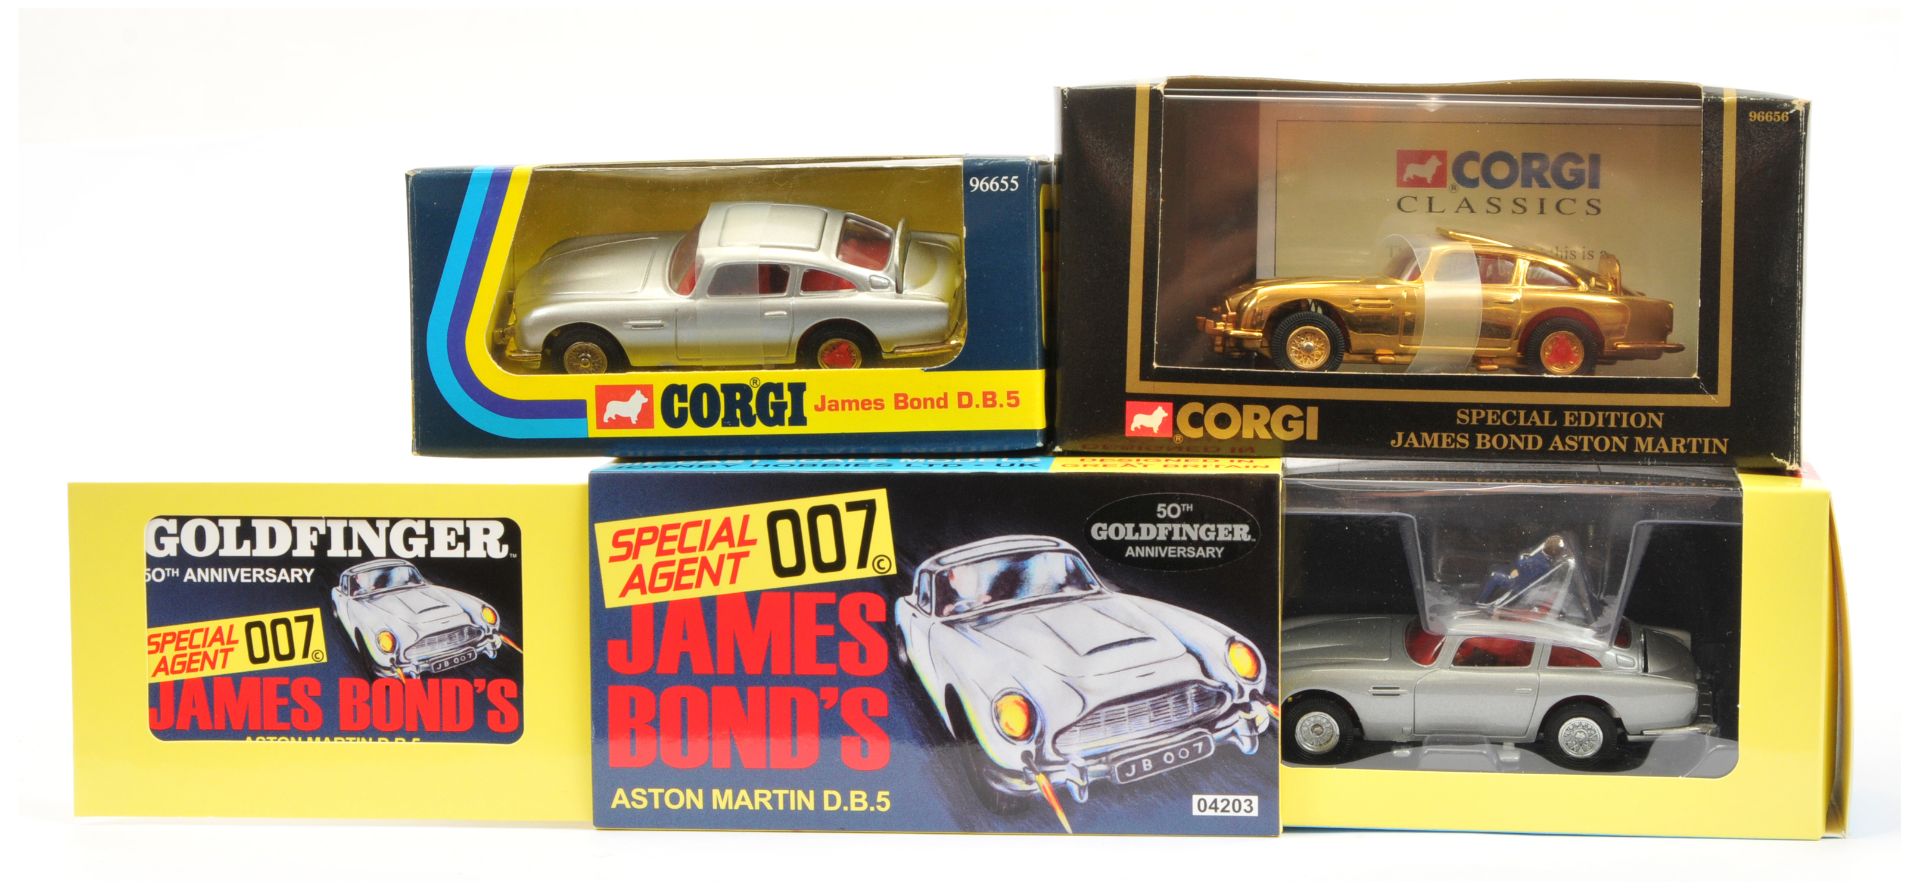 Corgi "James Bond" Aston Martin DB5 (1/43rd) Group Of 3 - (1) 96655 (re-issue 1995) - Silver, red...